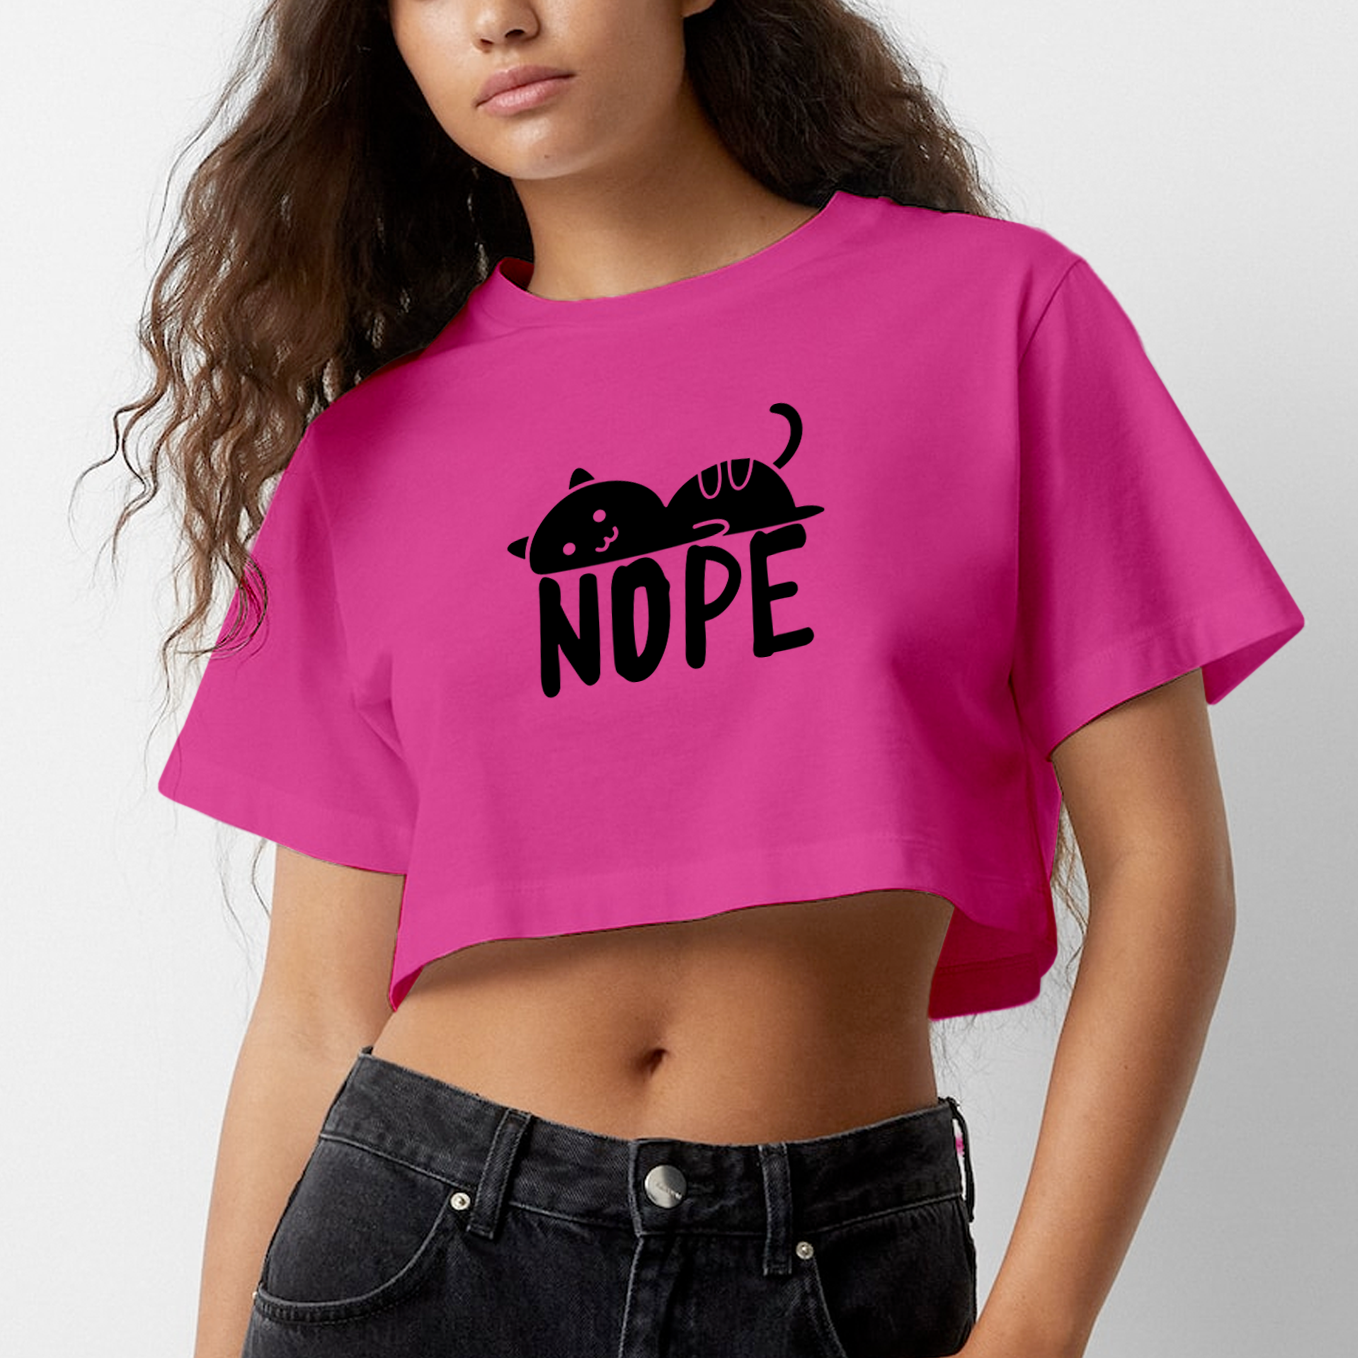 T-shirt "Nope"